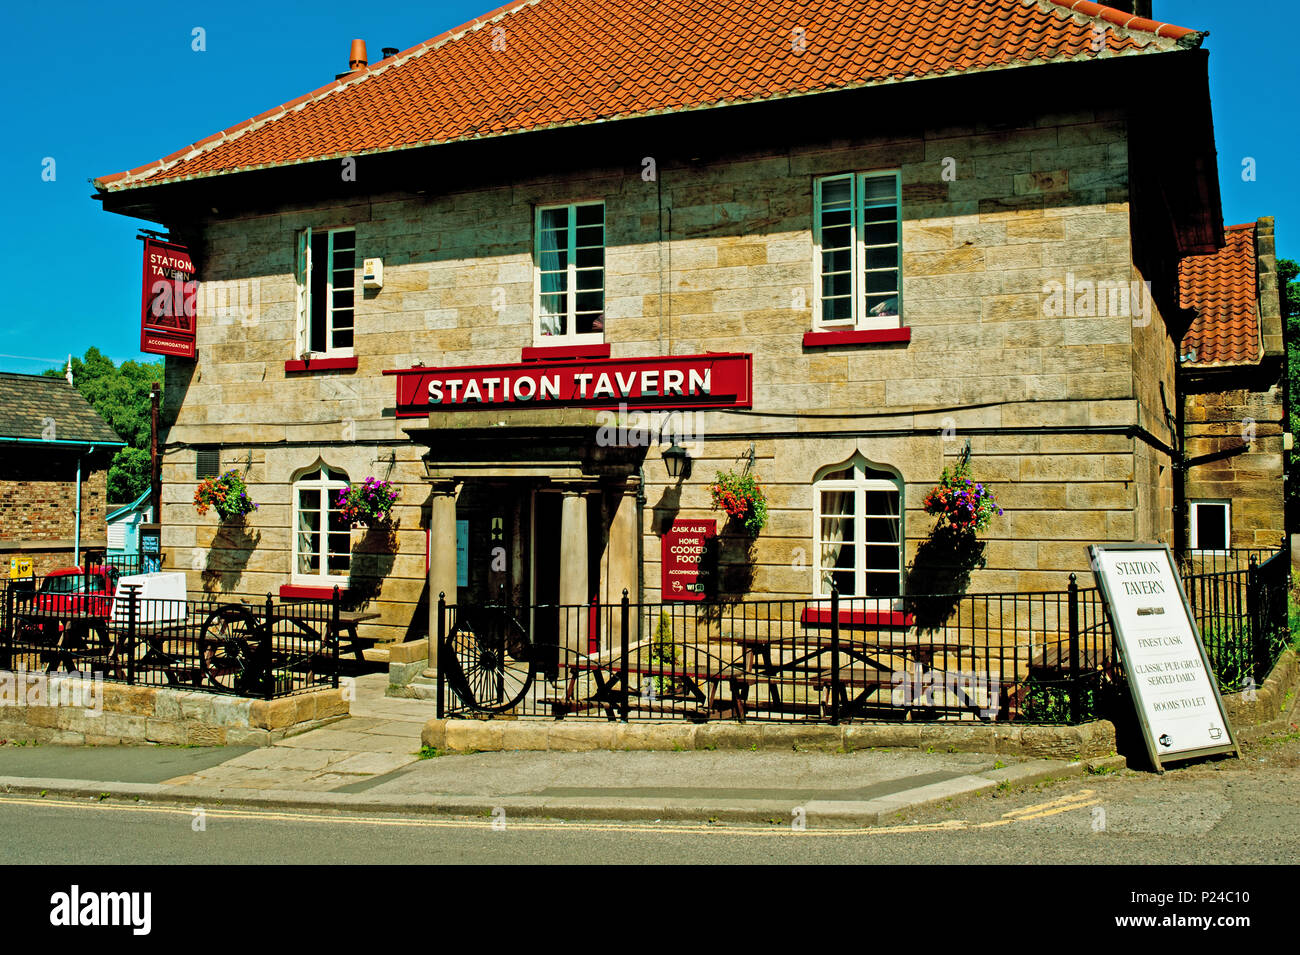 Station Tavern, Grosmont, North Yorkshire, England Stock Photo